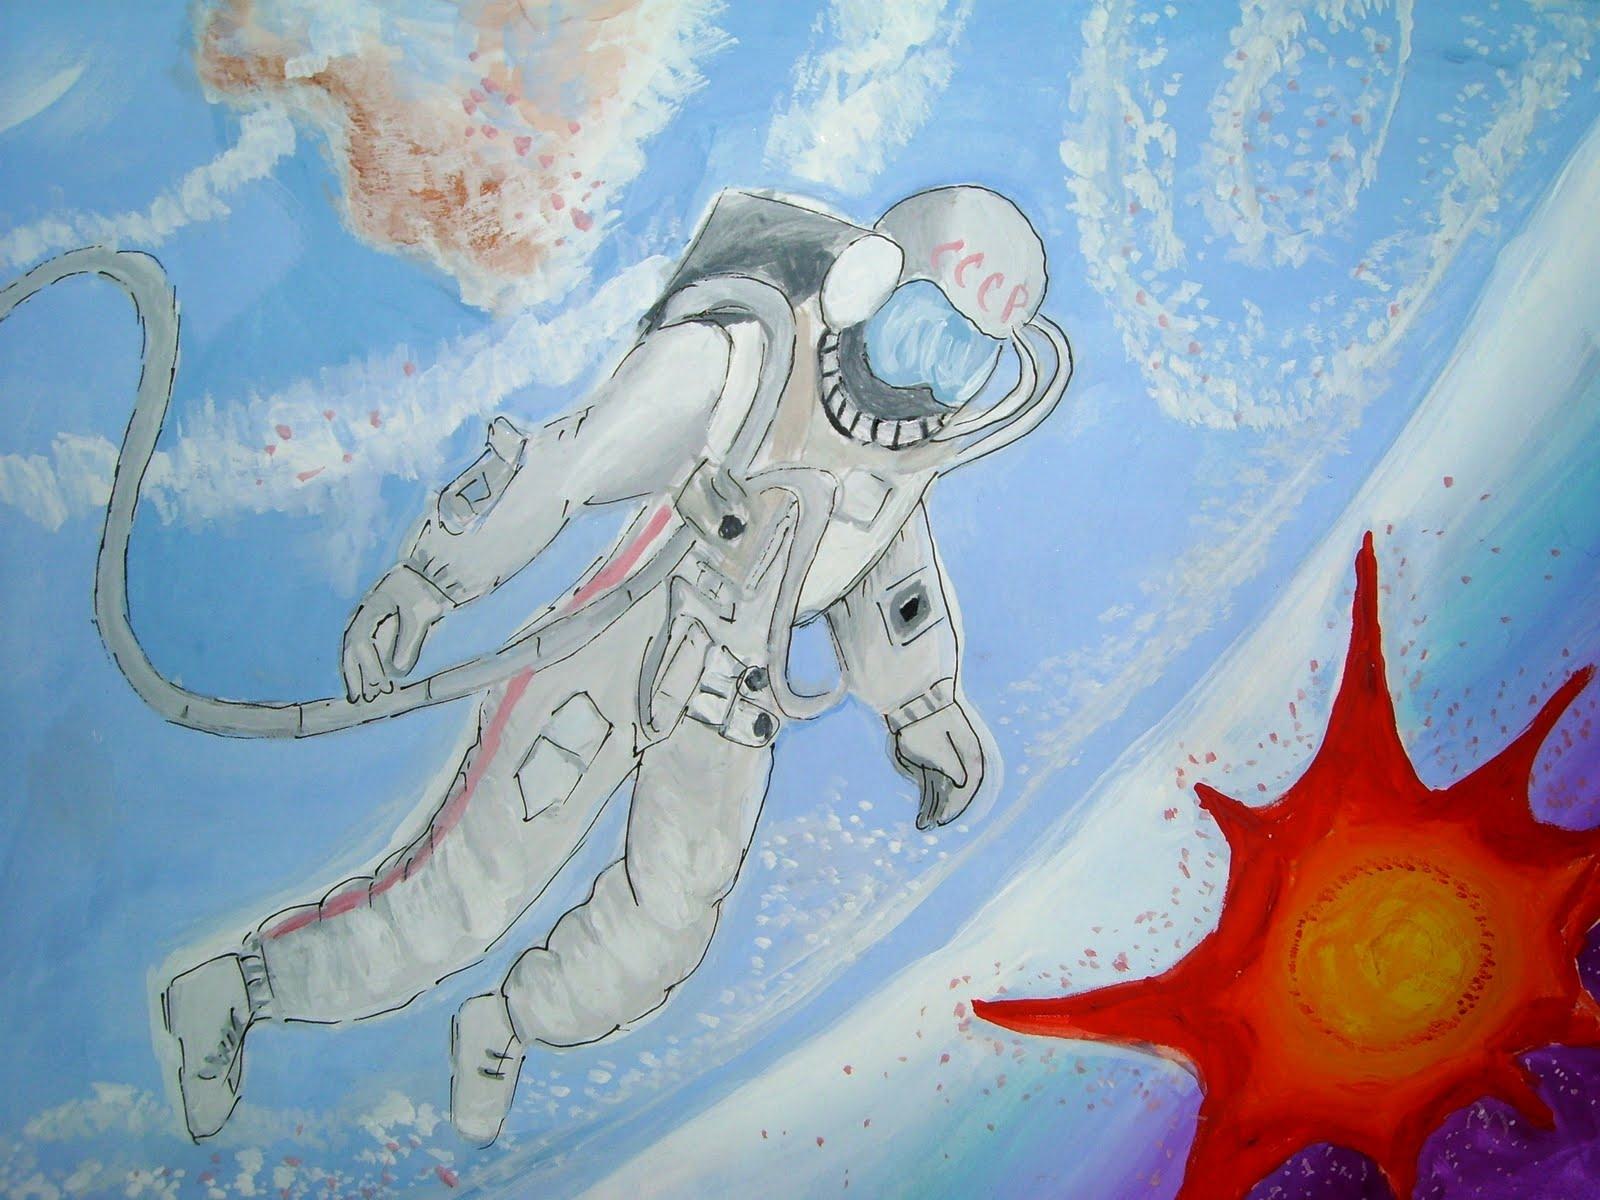 Рисунок на тему космонавтики 5 класс. Рисунок на космическую тему. Рисунок на тему космонавтики. Рисунок ко Дню космонавтики. Рисунок на космическую тему 4 класс.